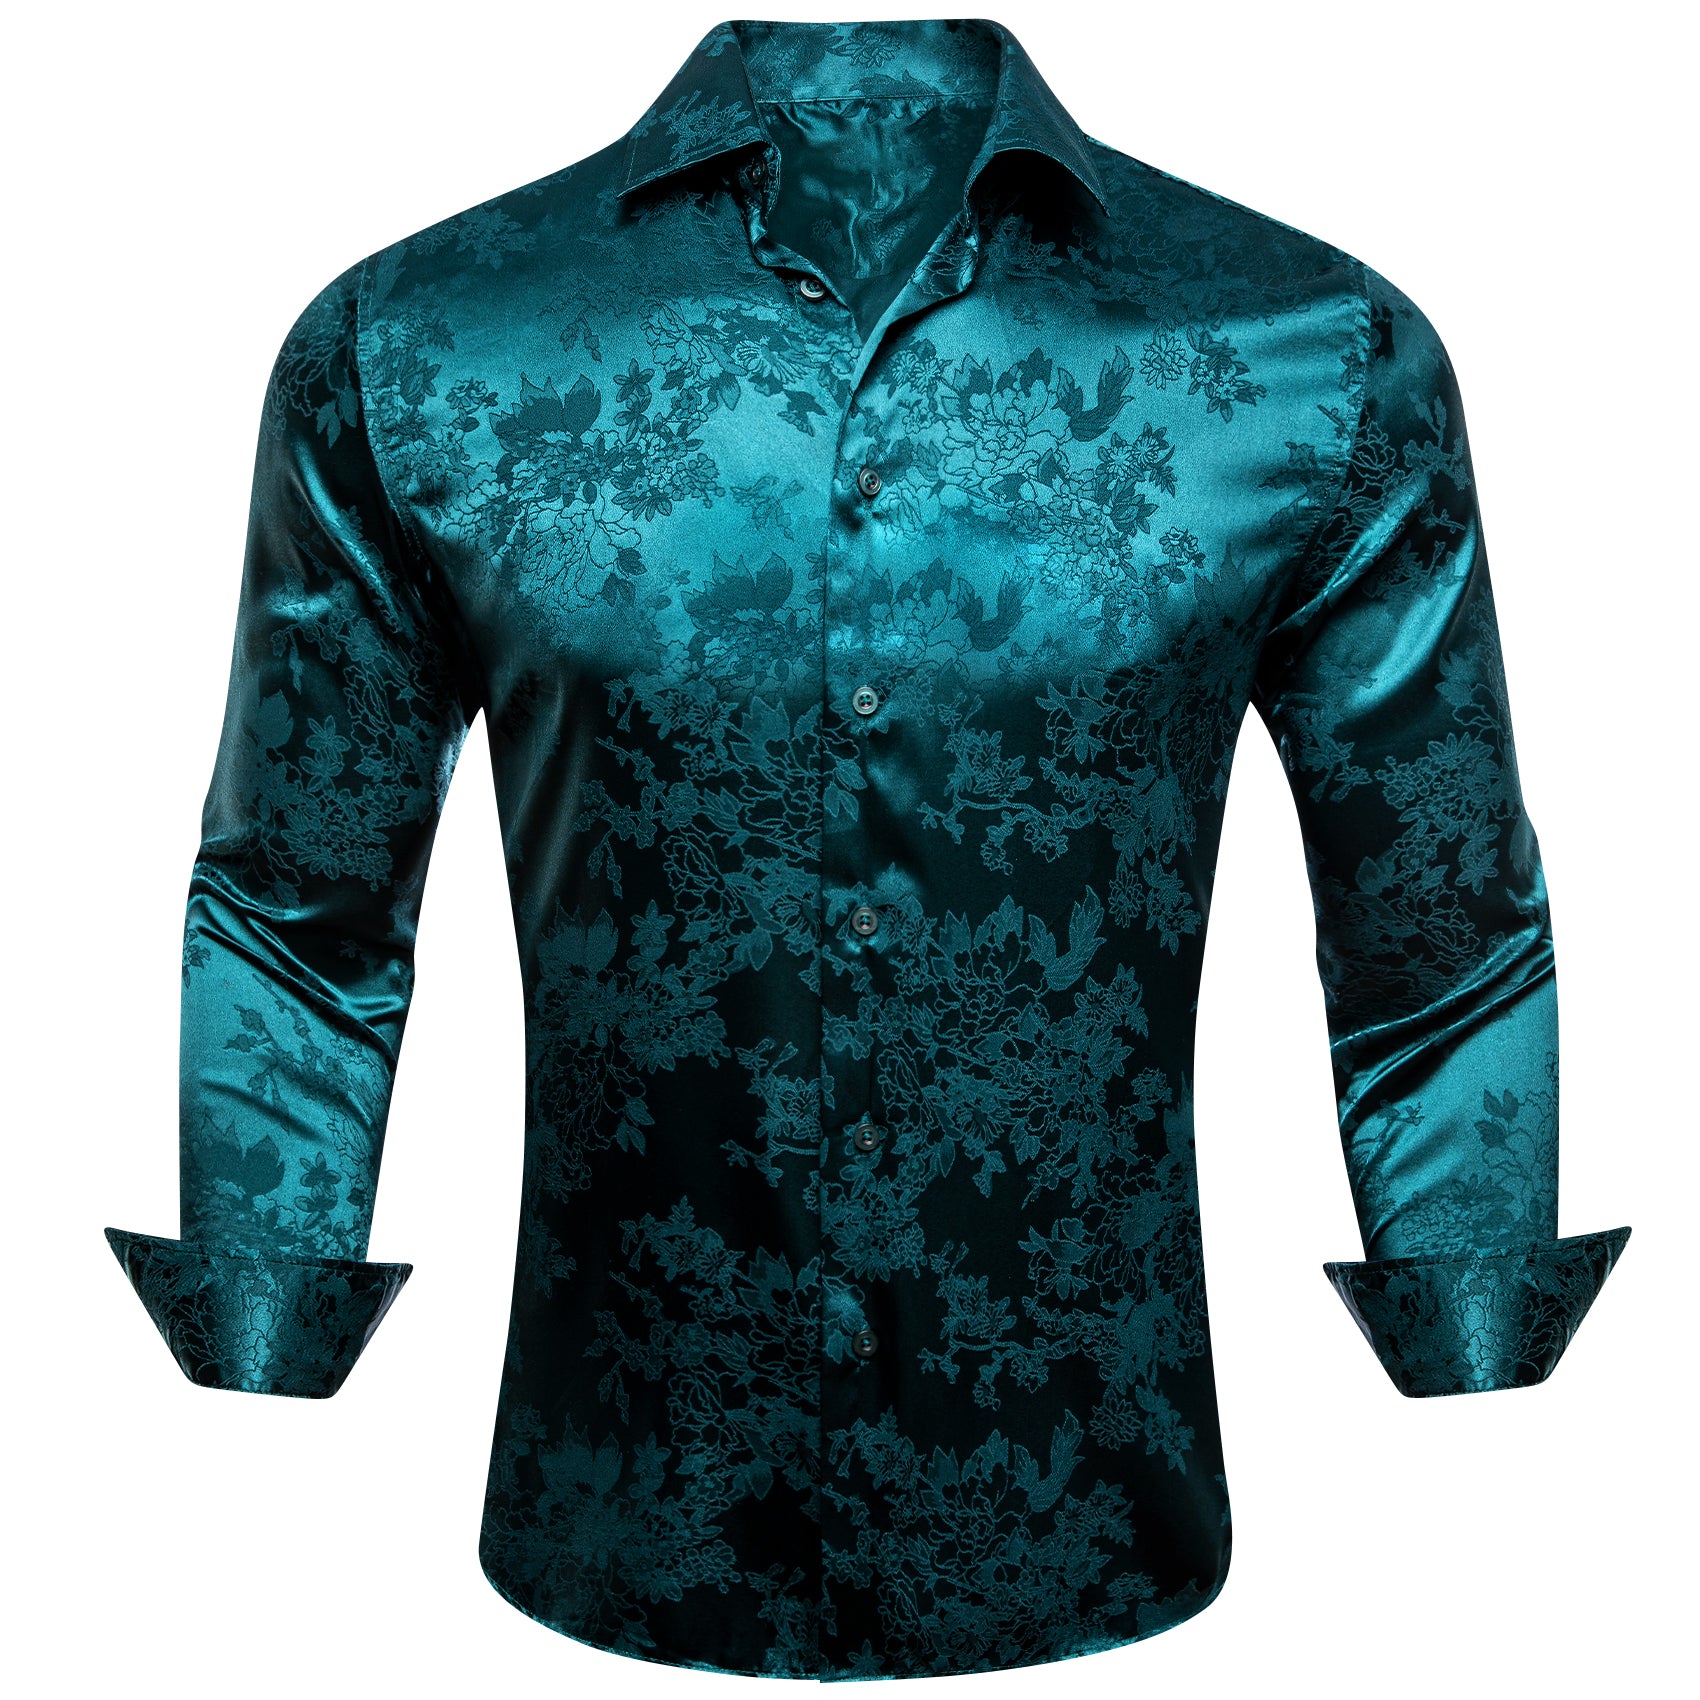 Barry.wang Nile Blue Floral Silk Men's Shirt